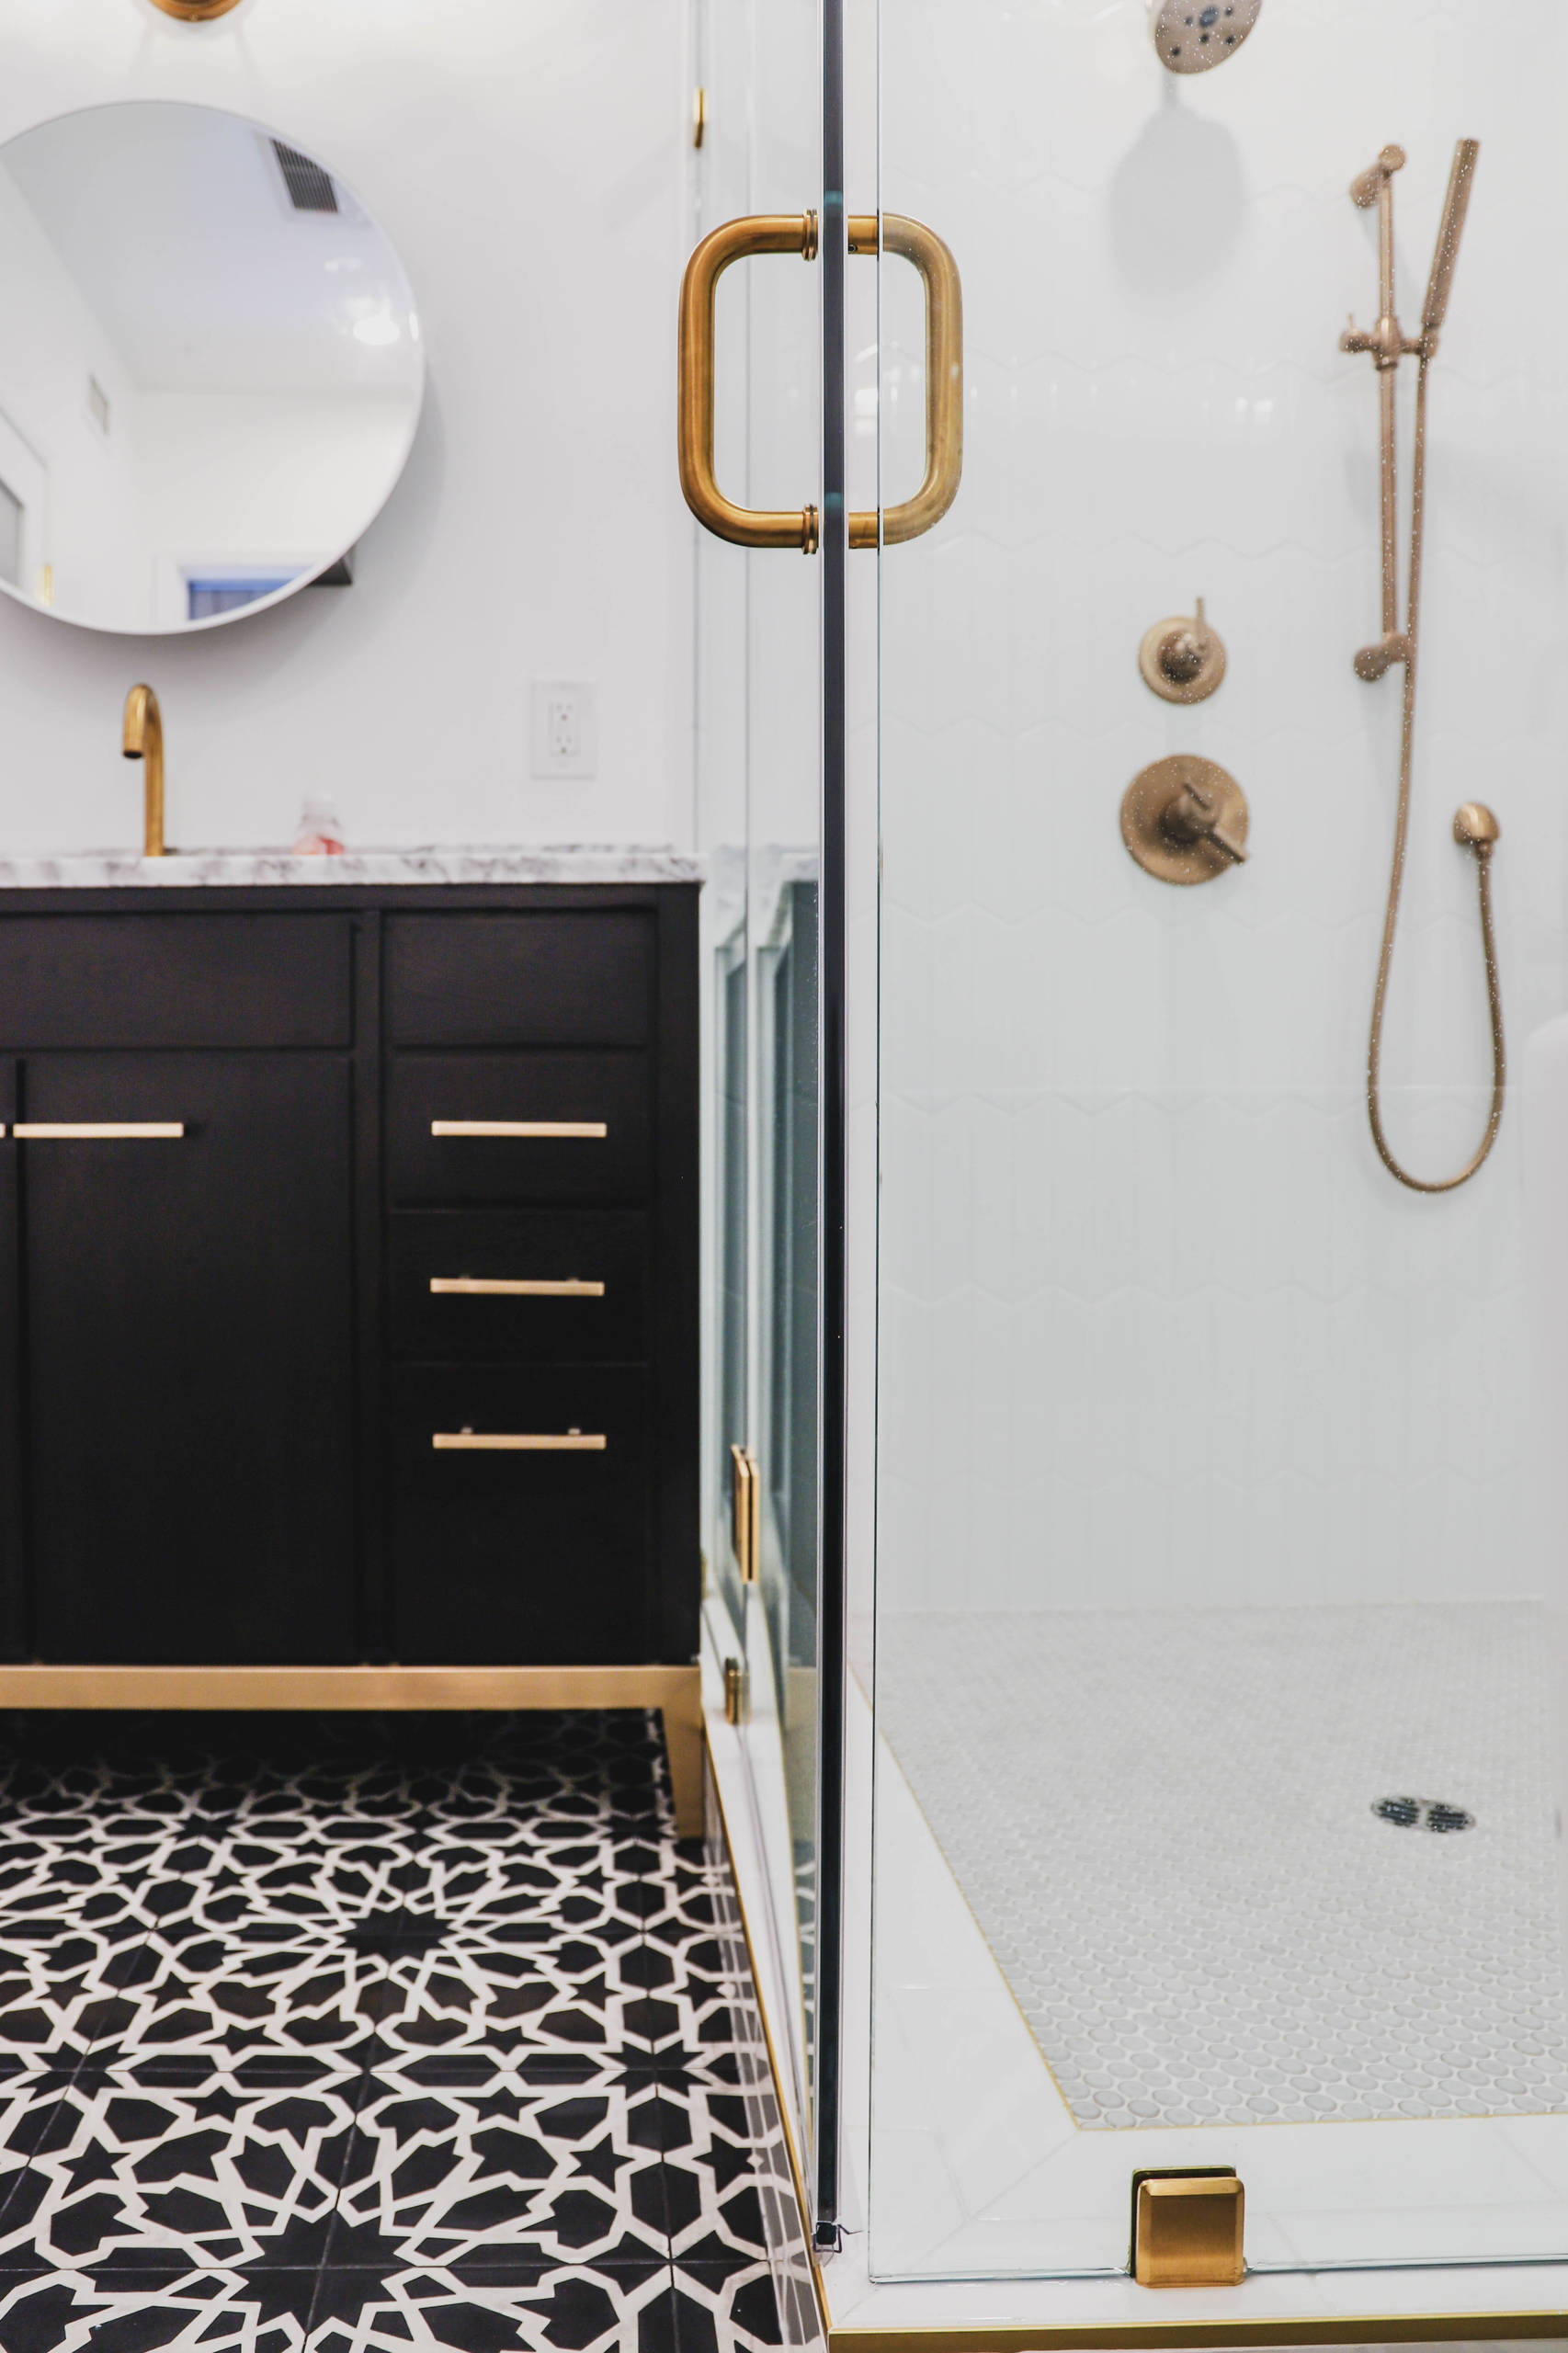 Decorative Tile Shower & Flooring, Shower Enclosure, Vanity & Fixtures